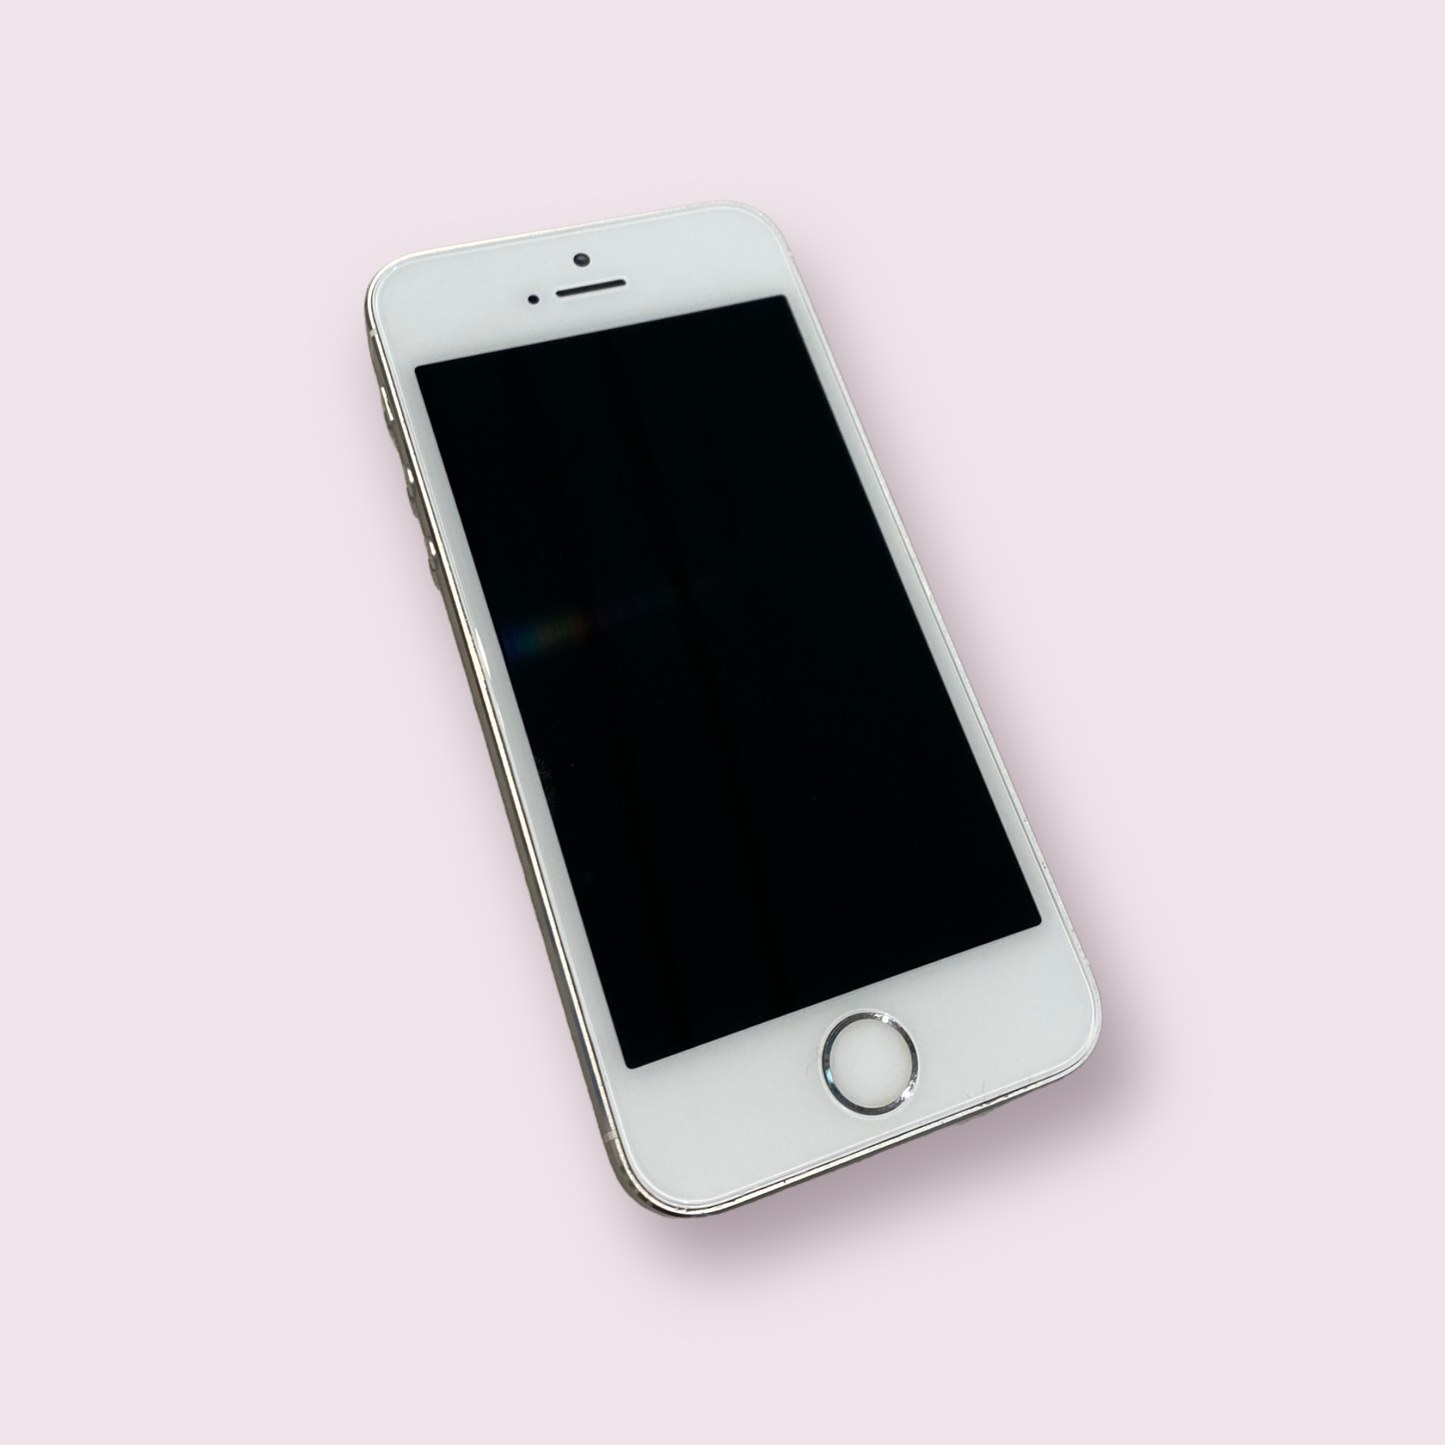 Apple iPhone 5S 16gb silver - Unlocked - Grade B